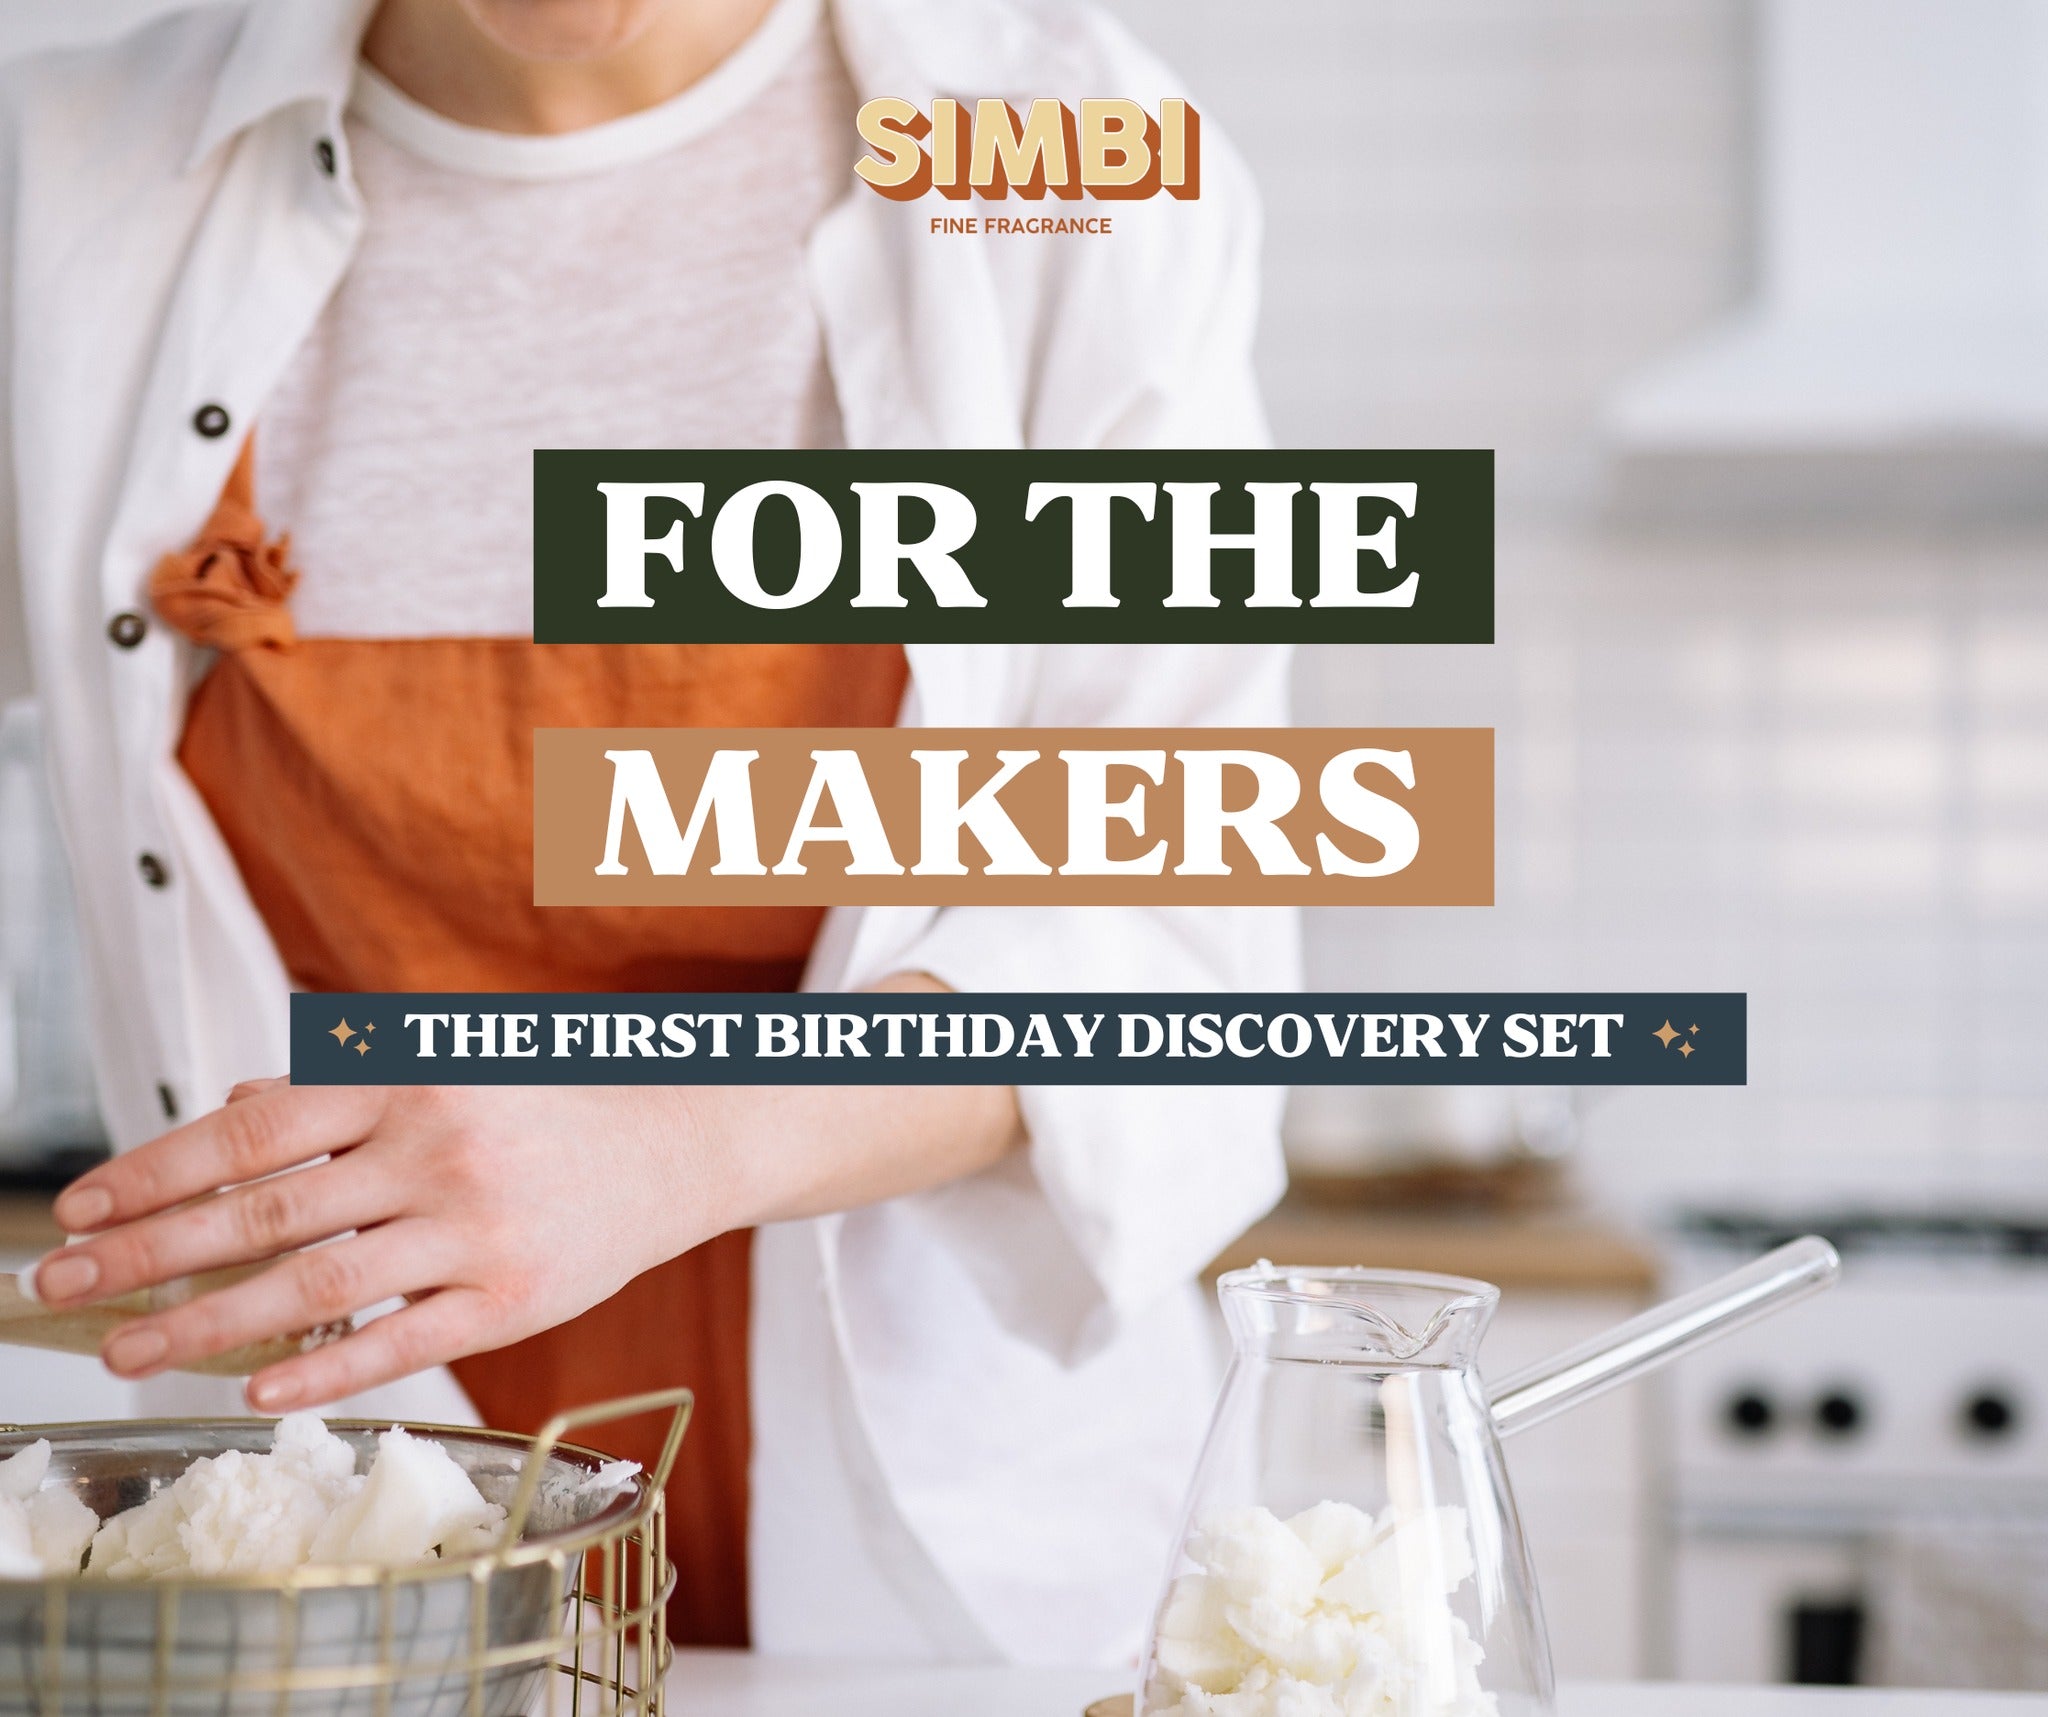 The Maker Maker Perfume Discovery Kit